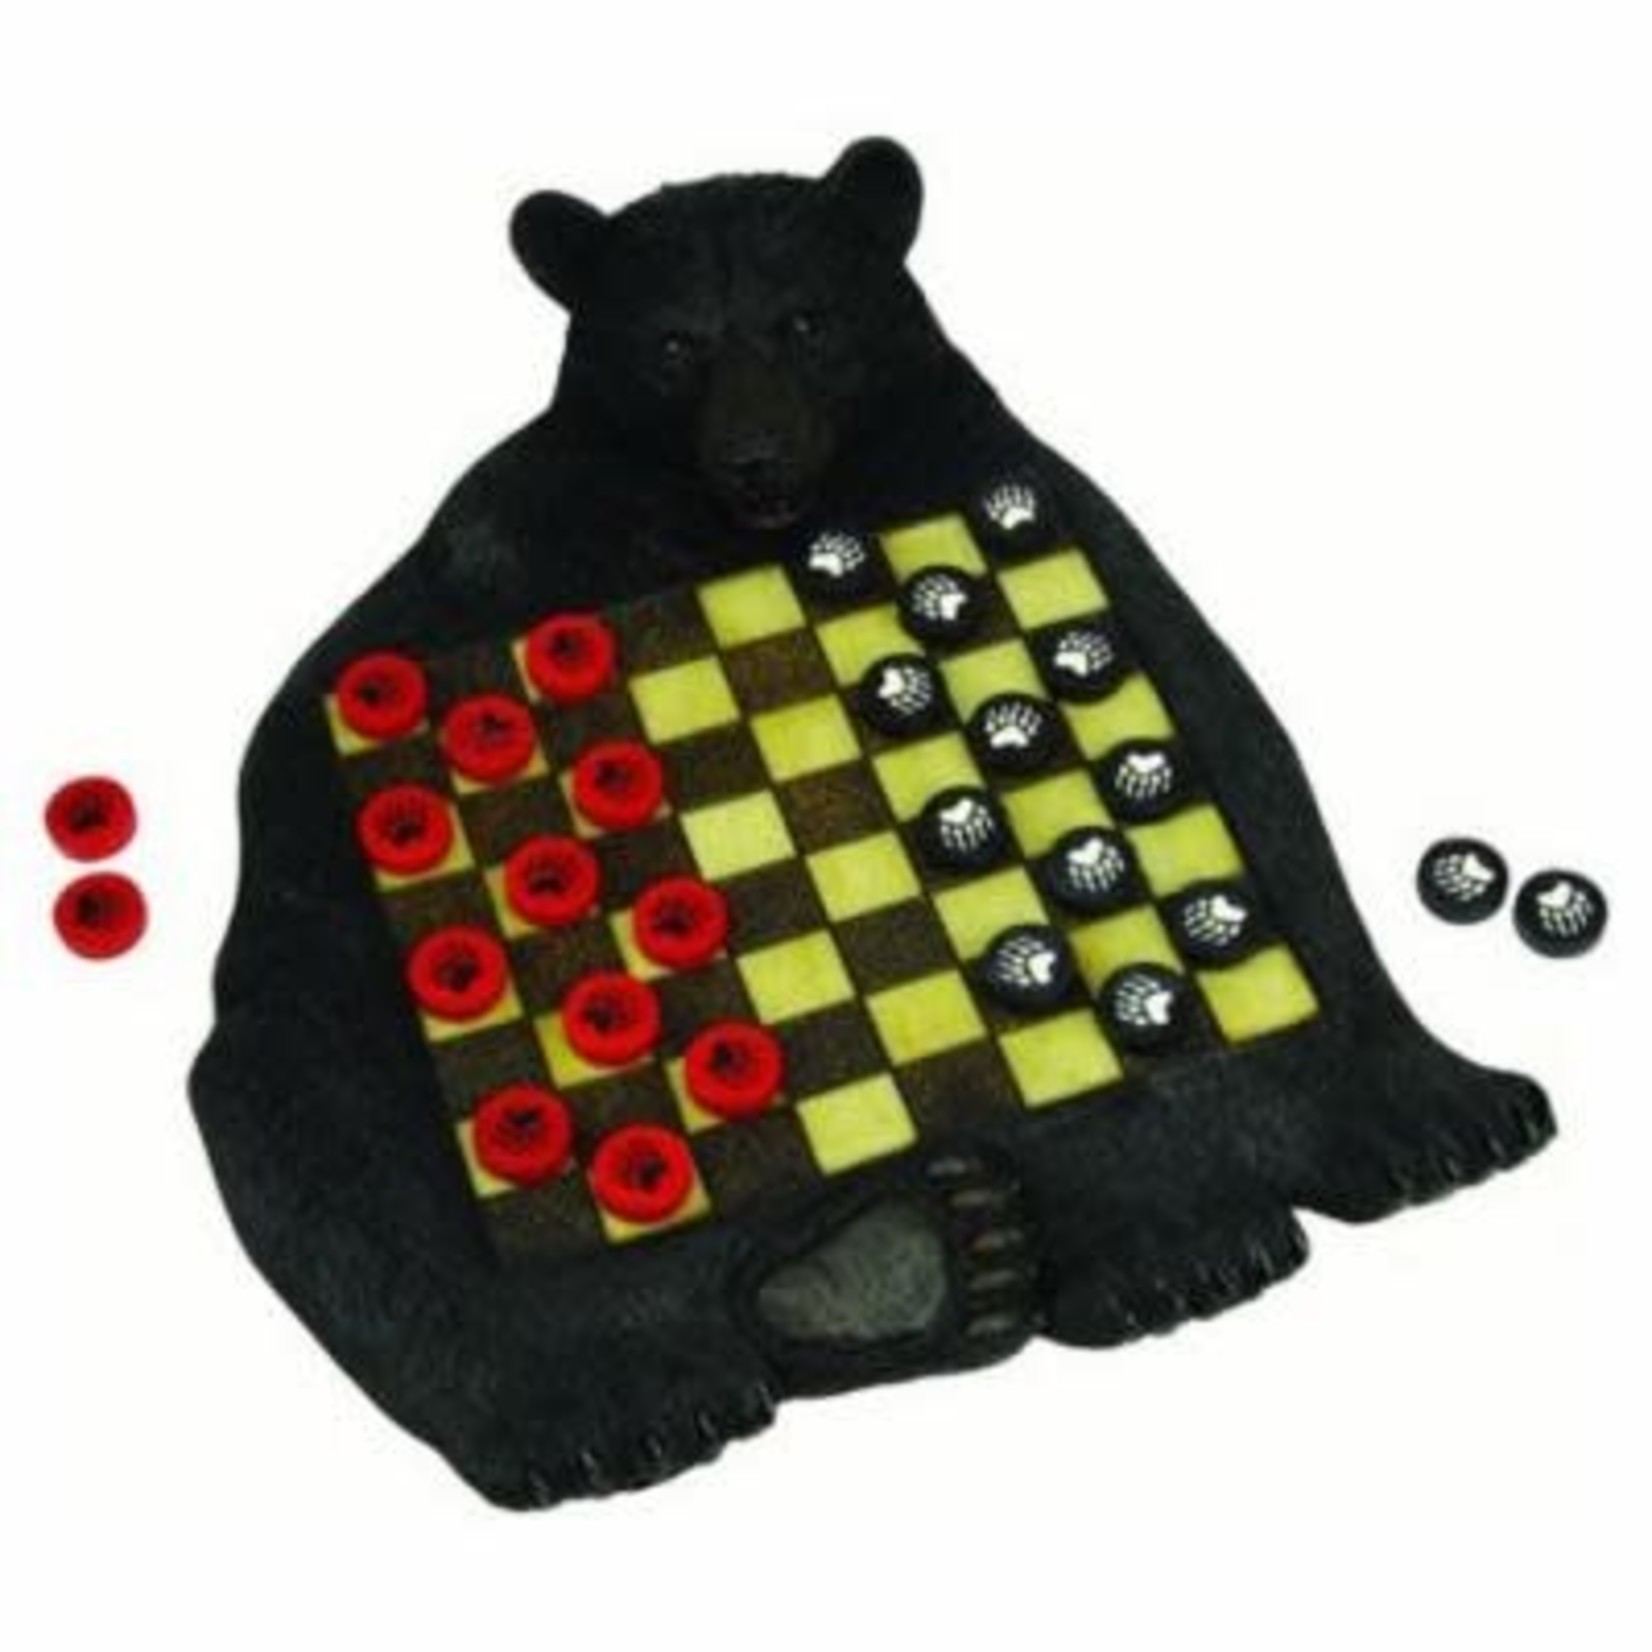 Bear shaped bd &paw checkers